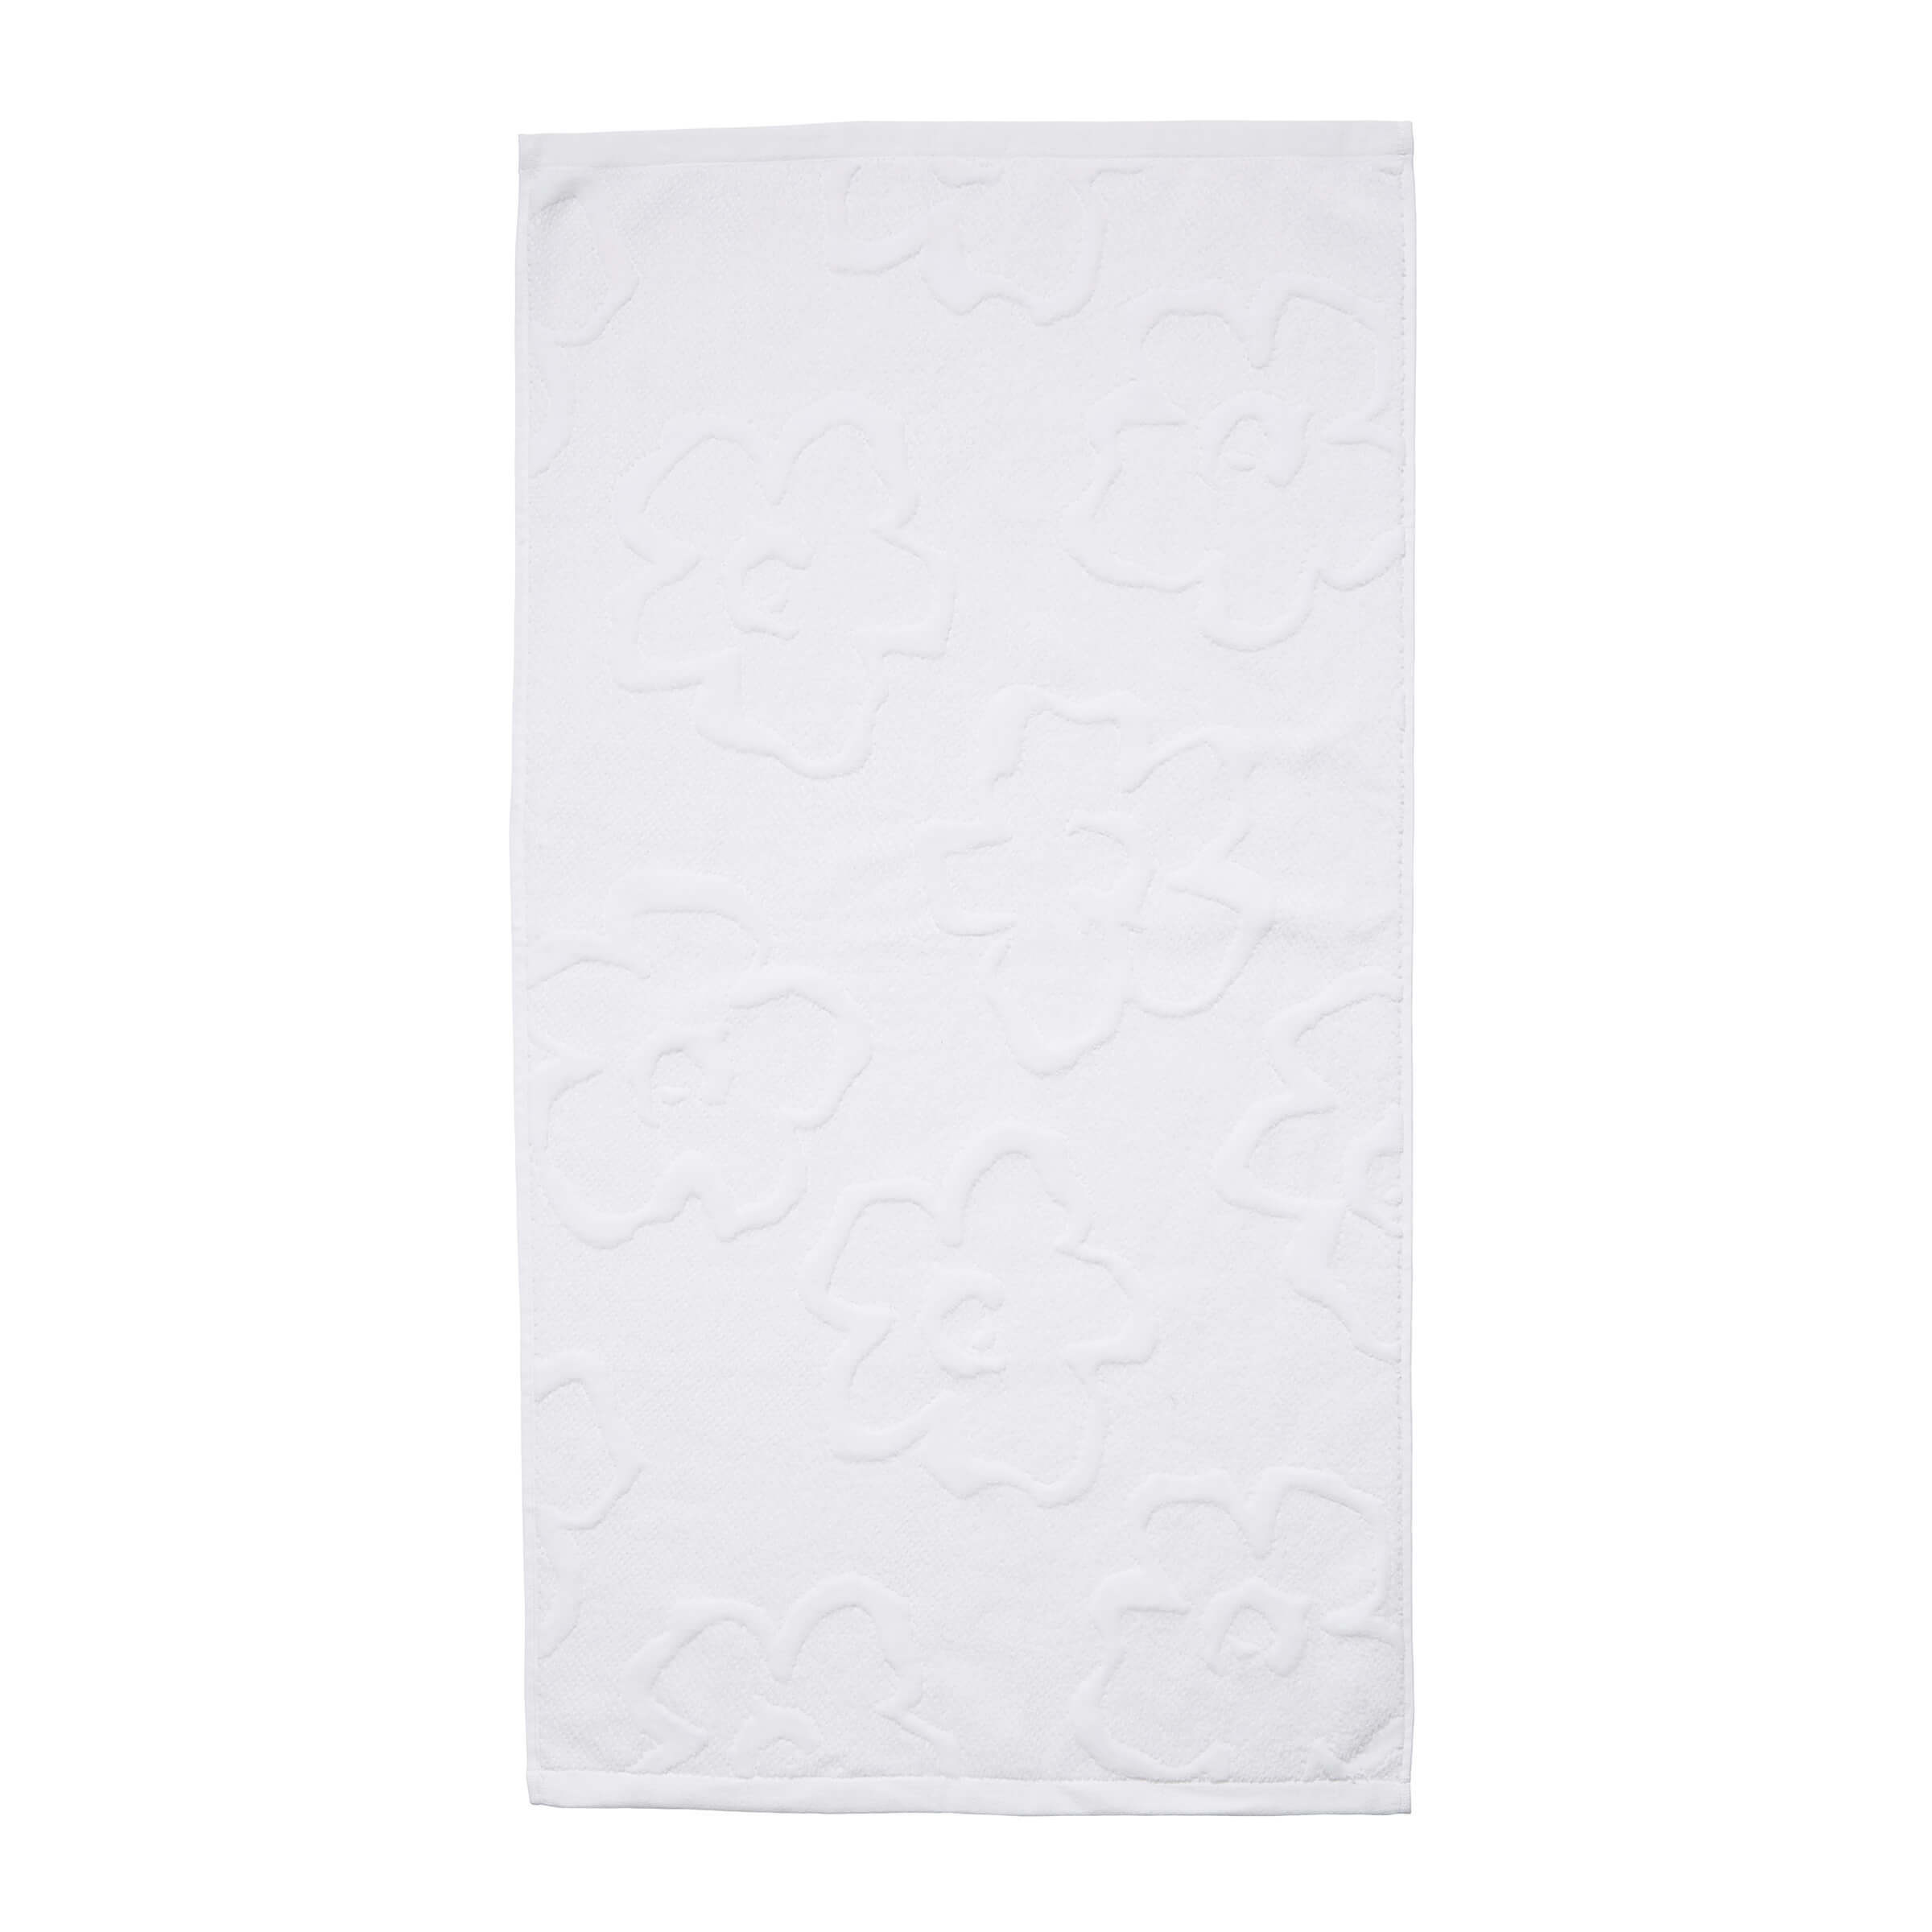 Ted Baker Magnolia Bath Towel, White - image 1